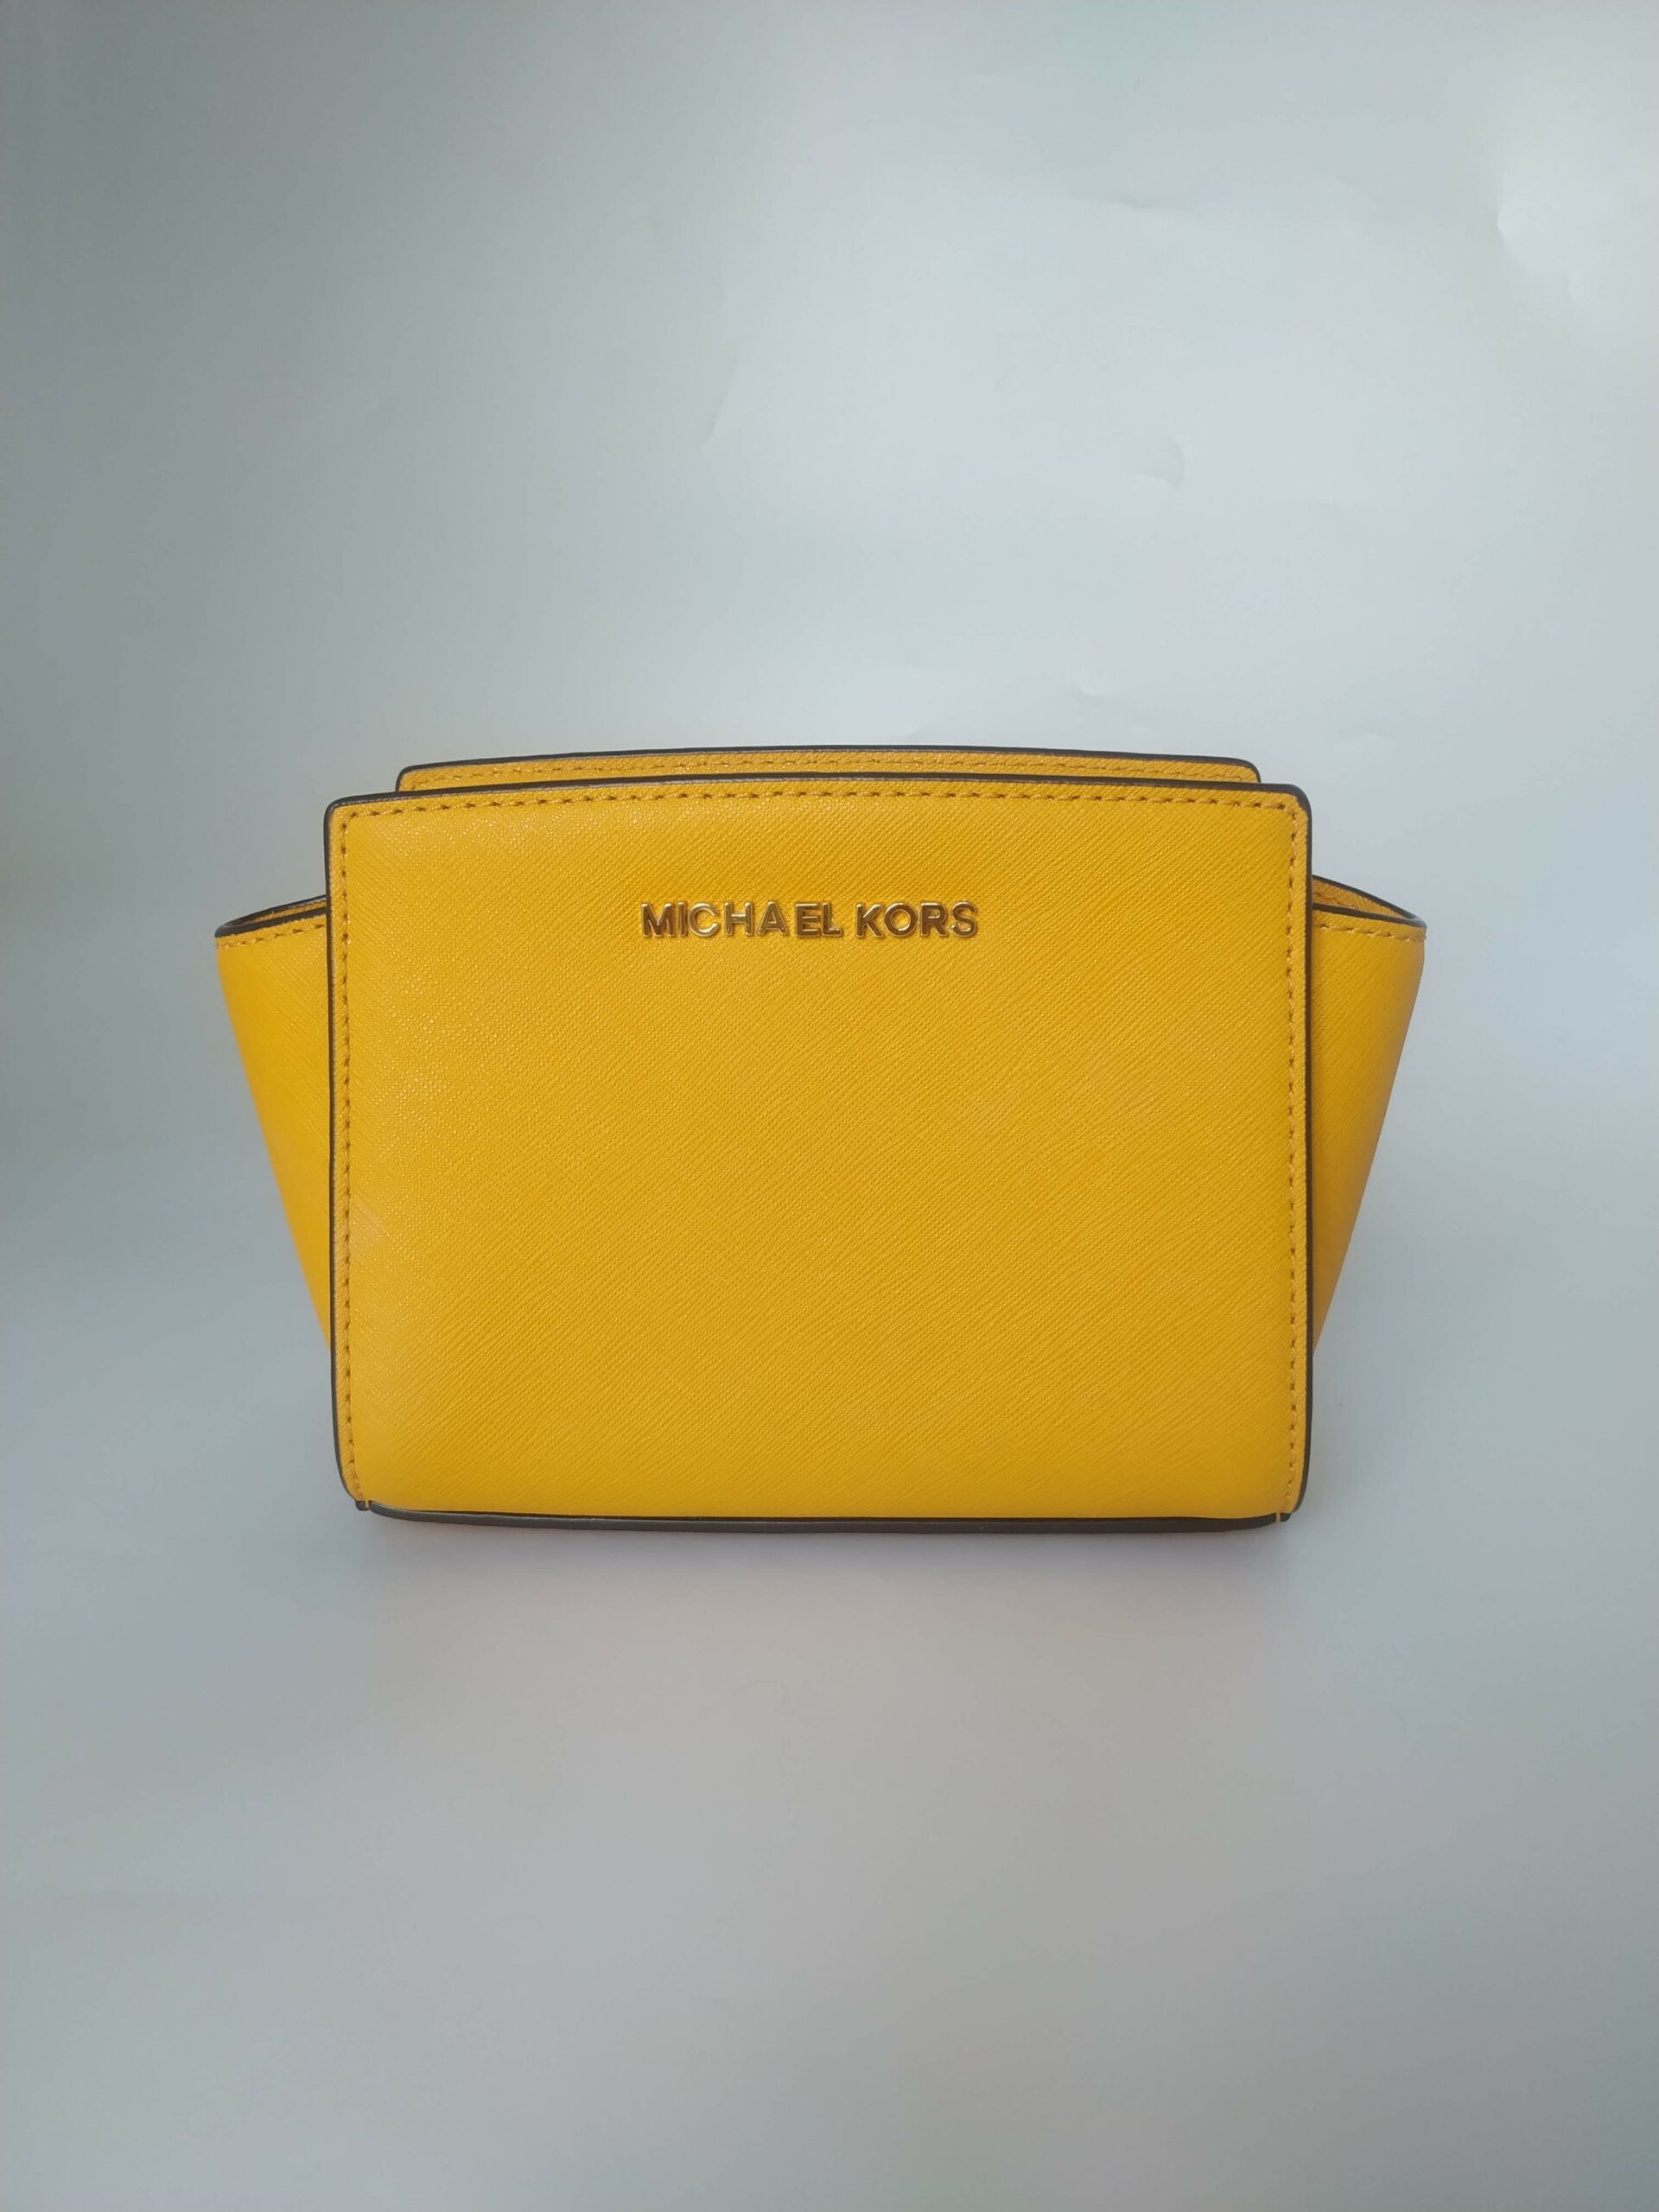 Handbags Michael Kors, Style code: 32F2G7HC1-L706-